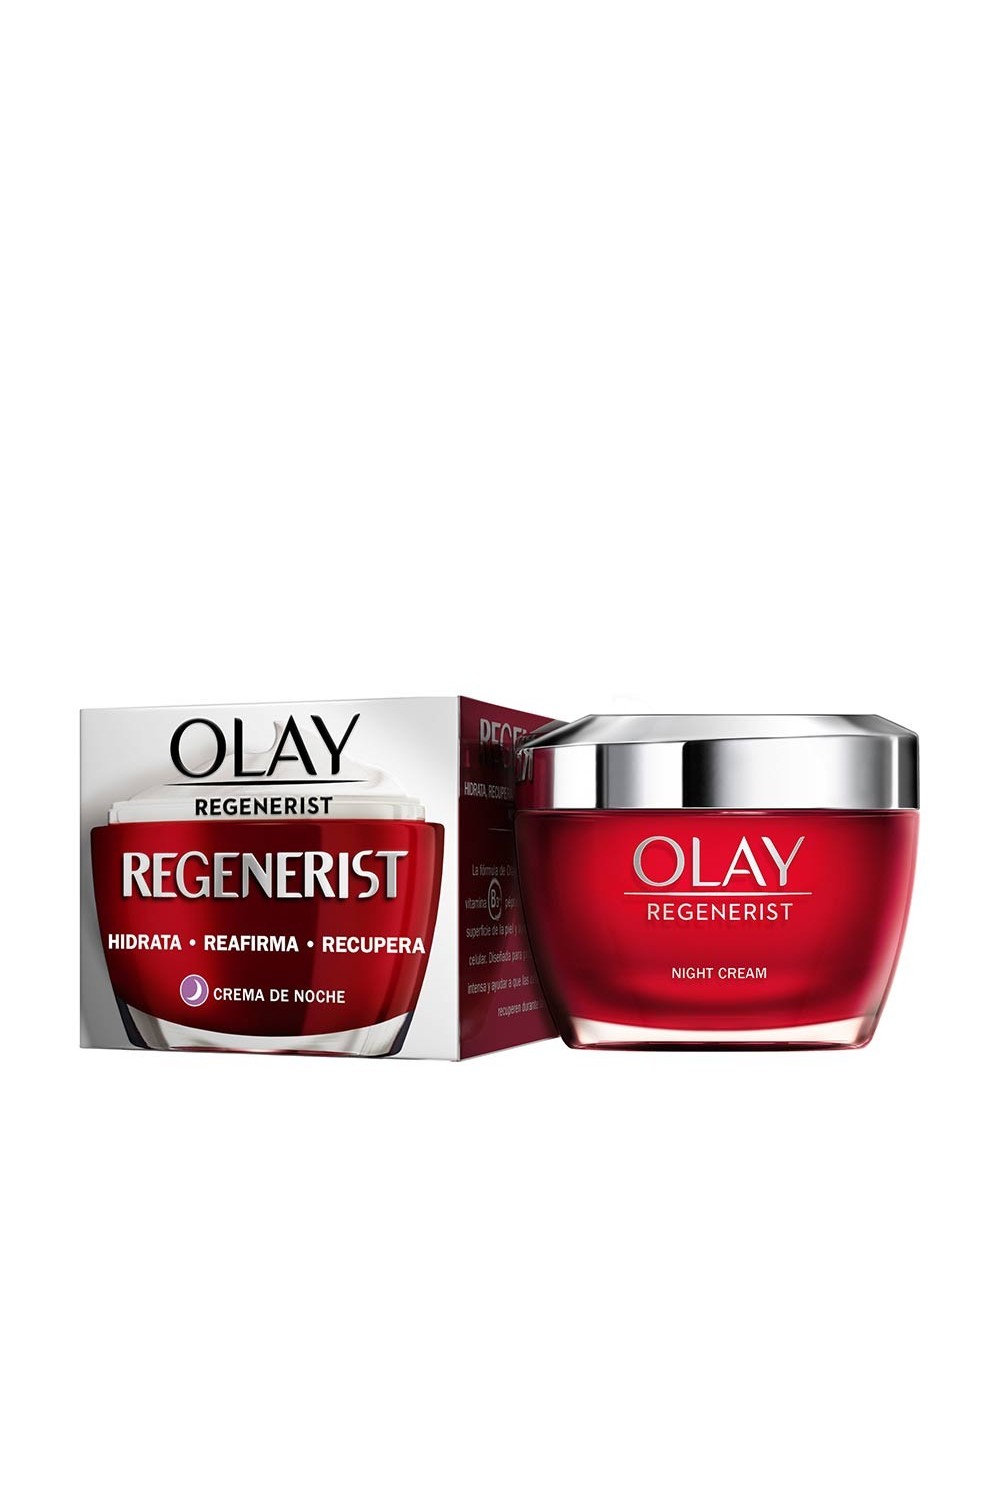 Olay Regenerist 3 Point Age Defying Cream Night 50ml